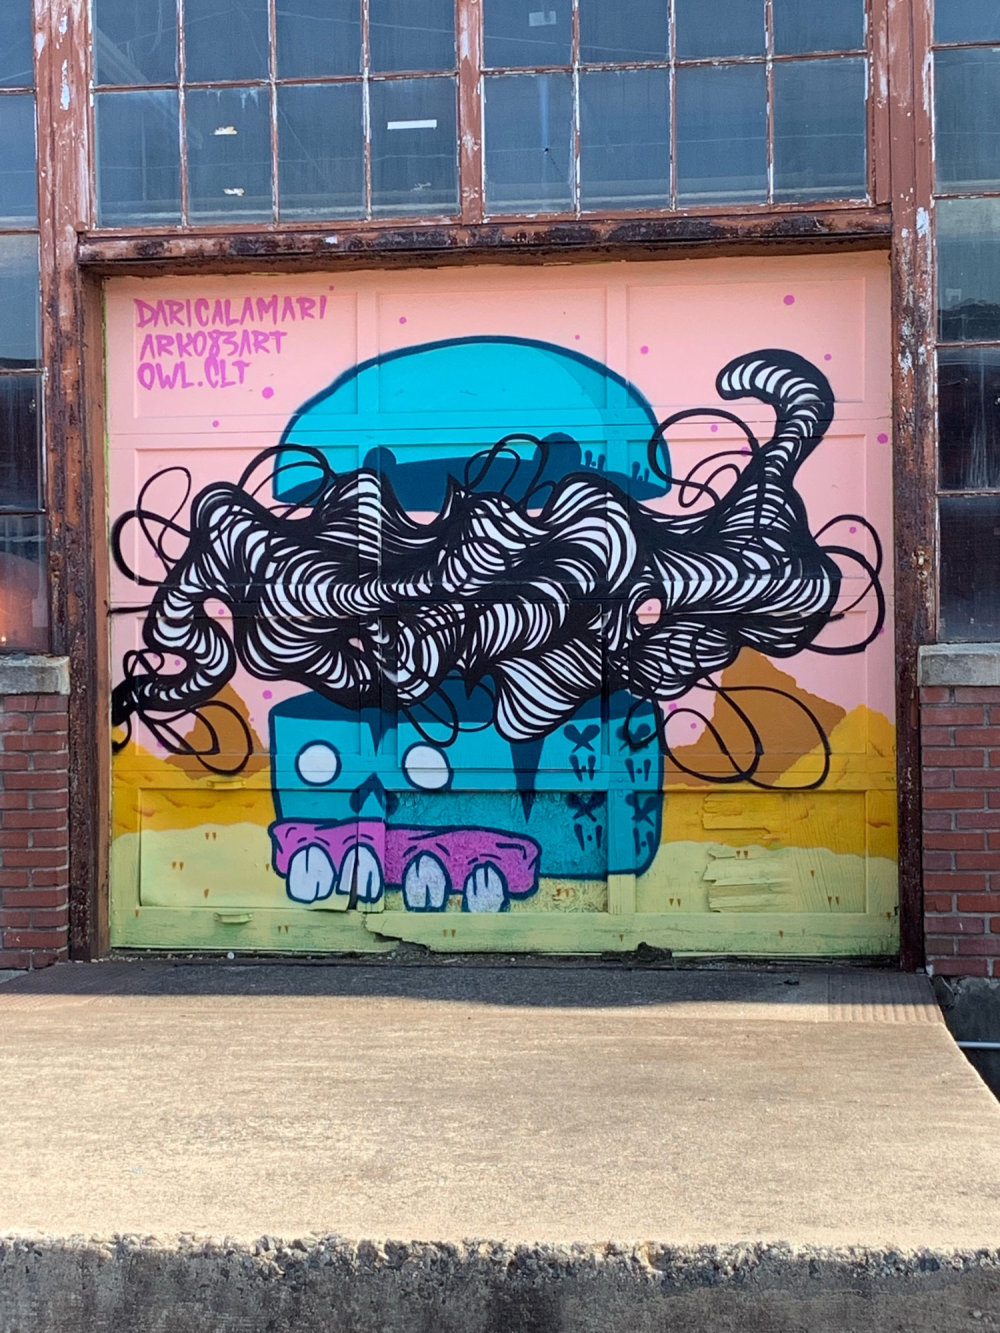 mural in Charlotte by artist Owl.